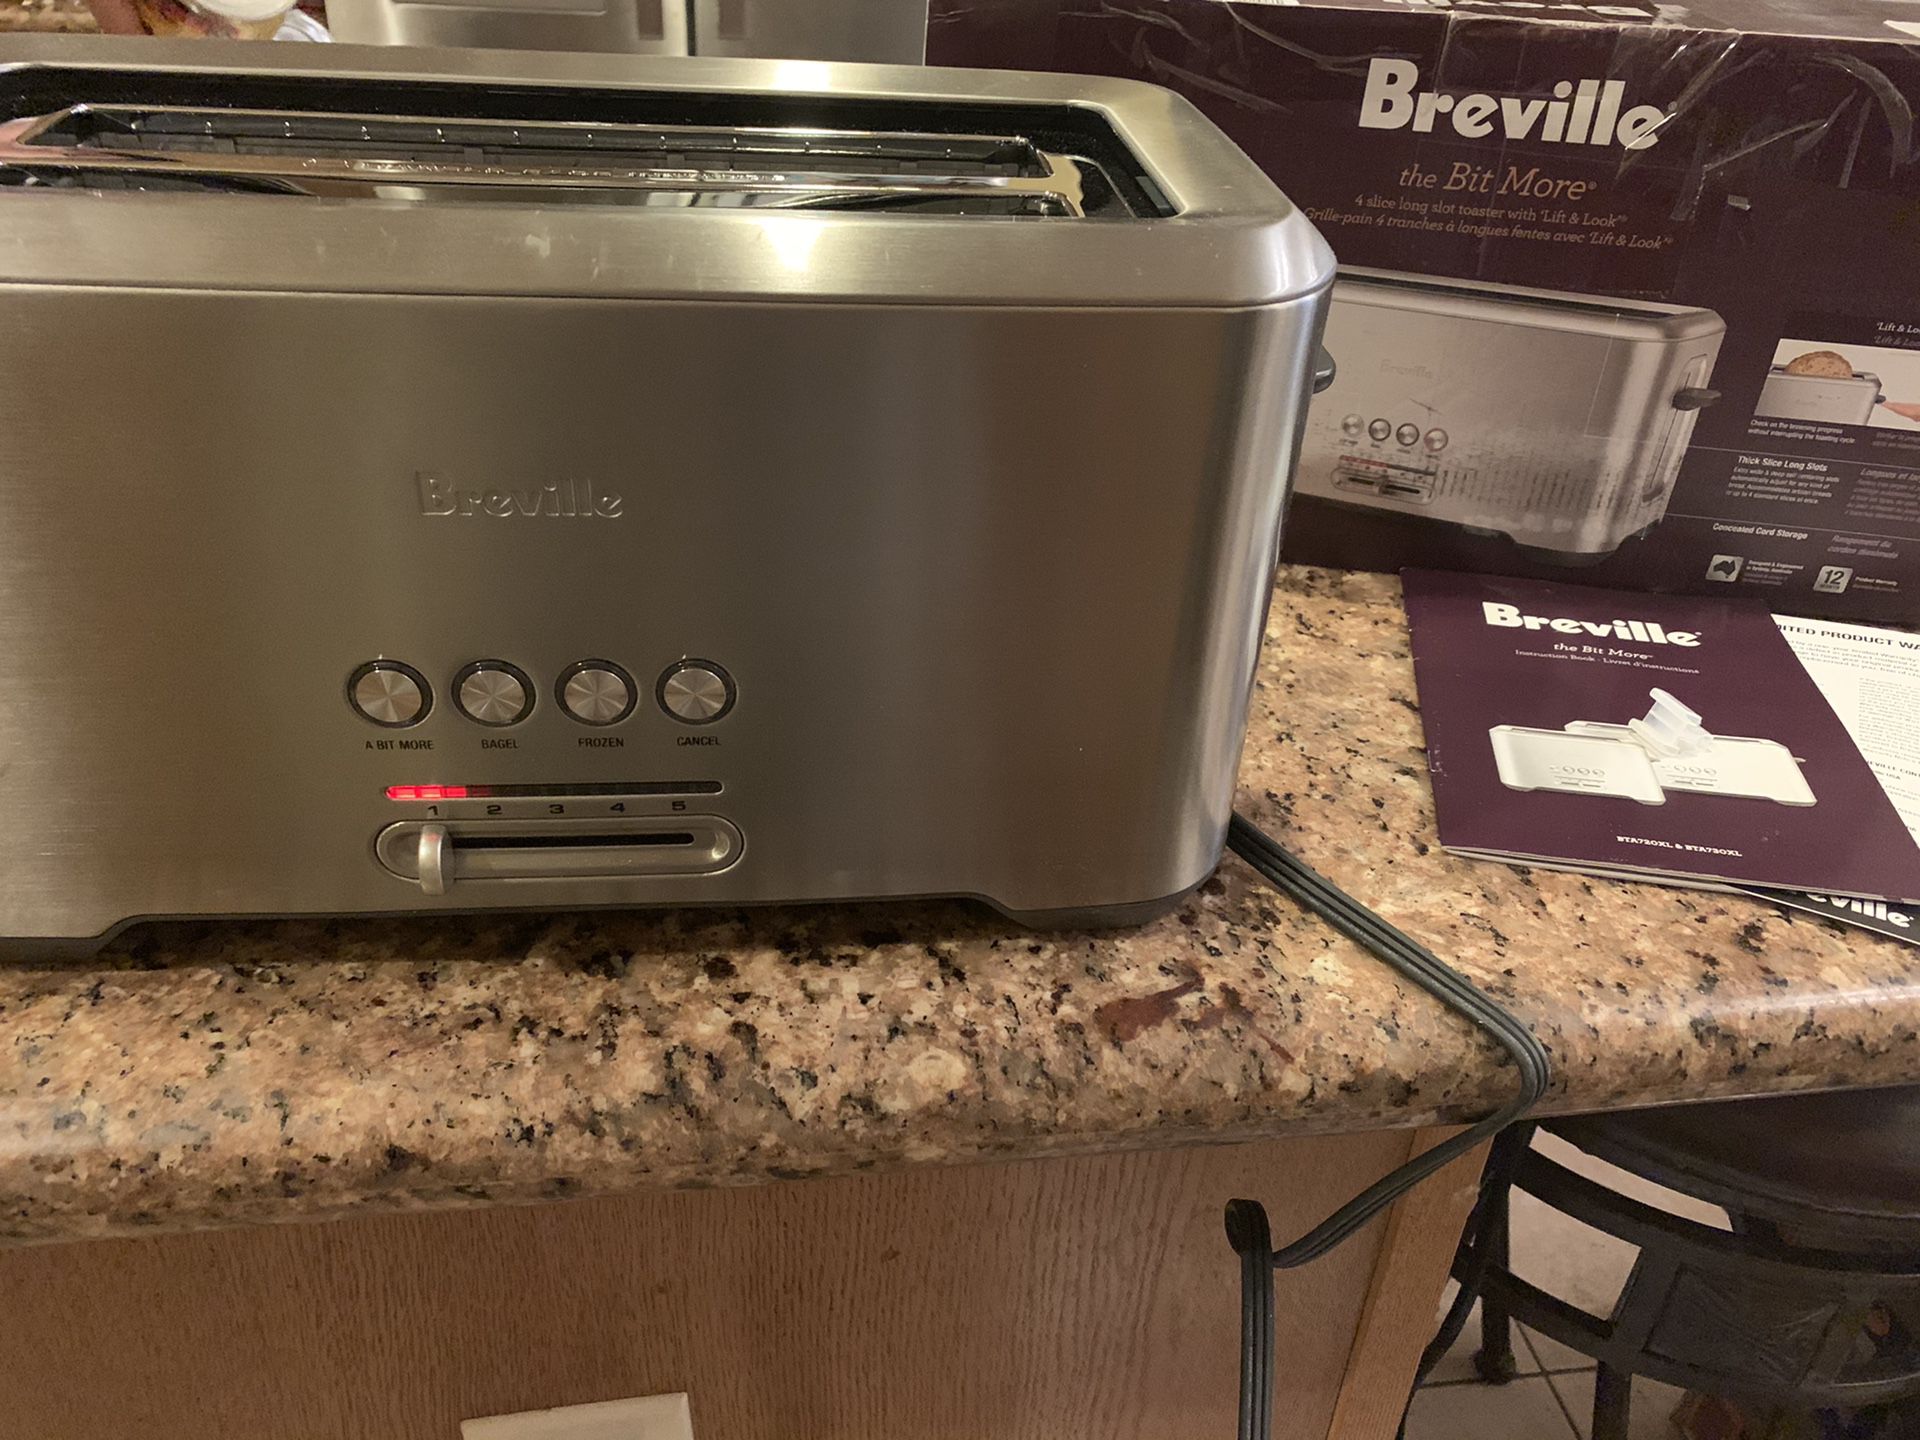 Breville BTA730XL The Bit More 4-Slice Toaster